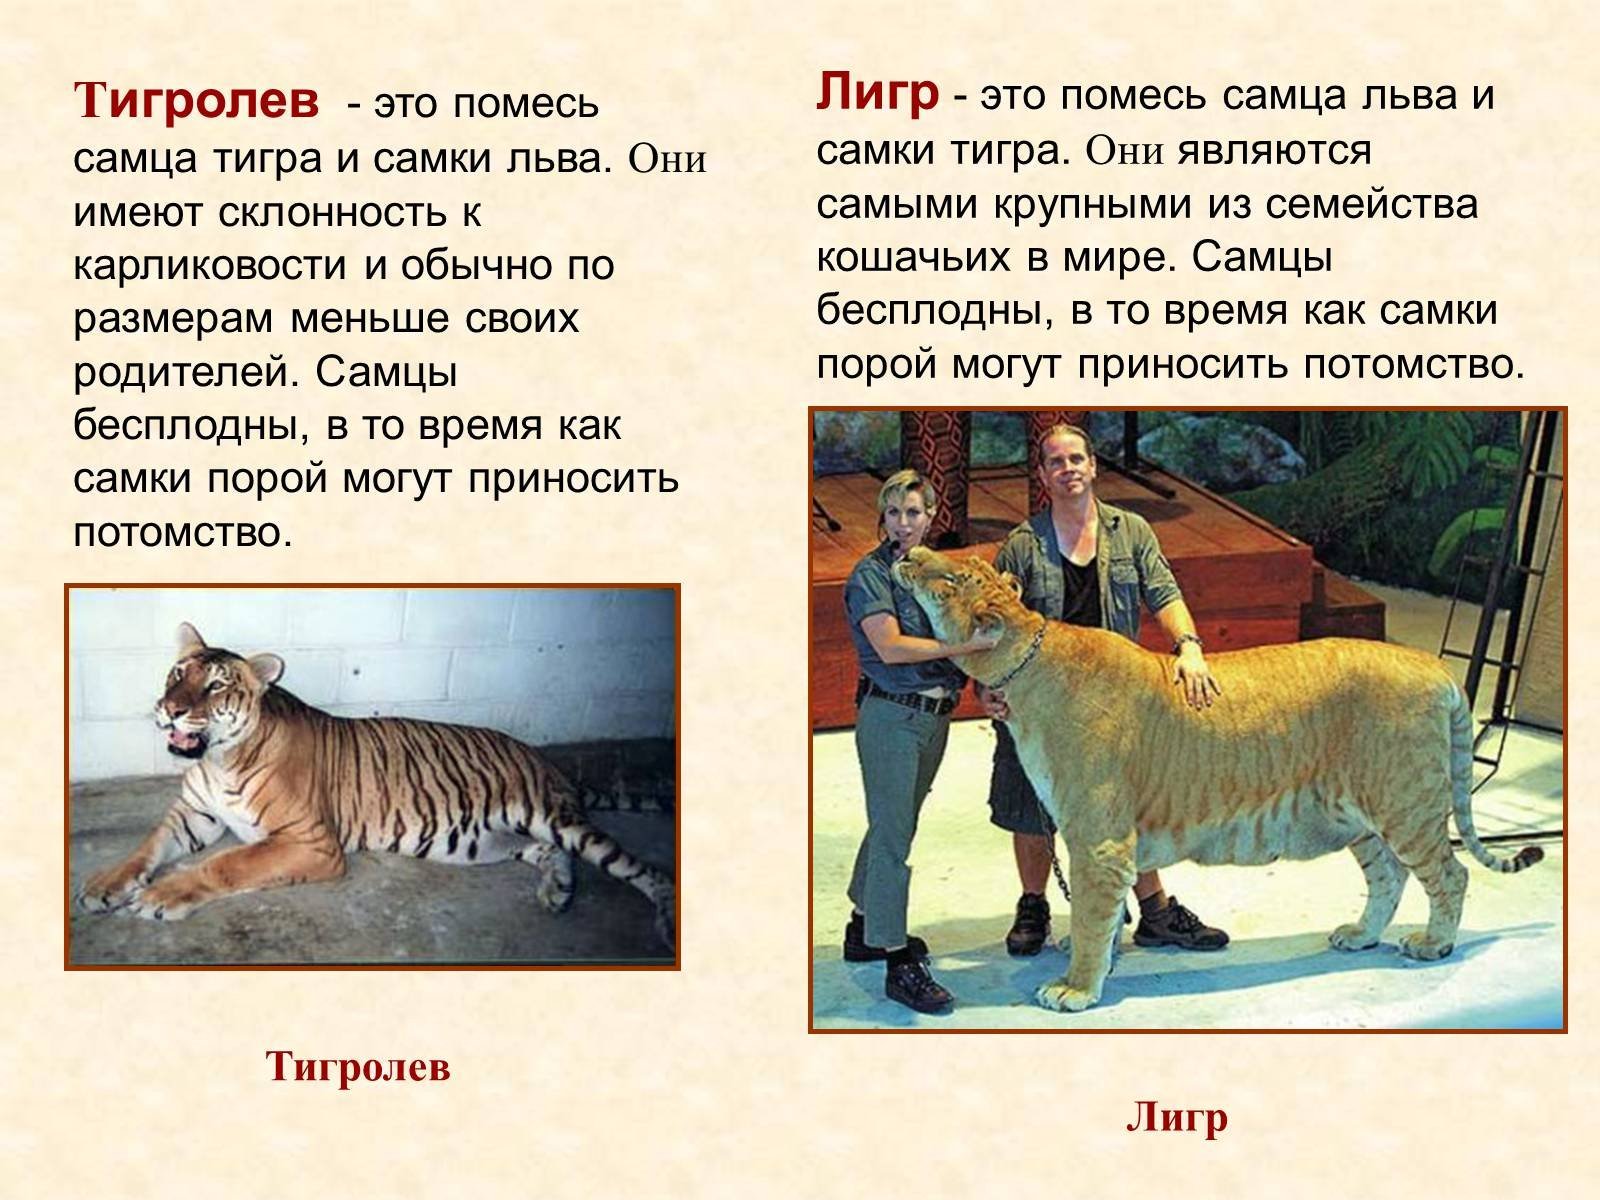 Характеристика льва тигра